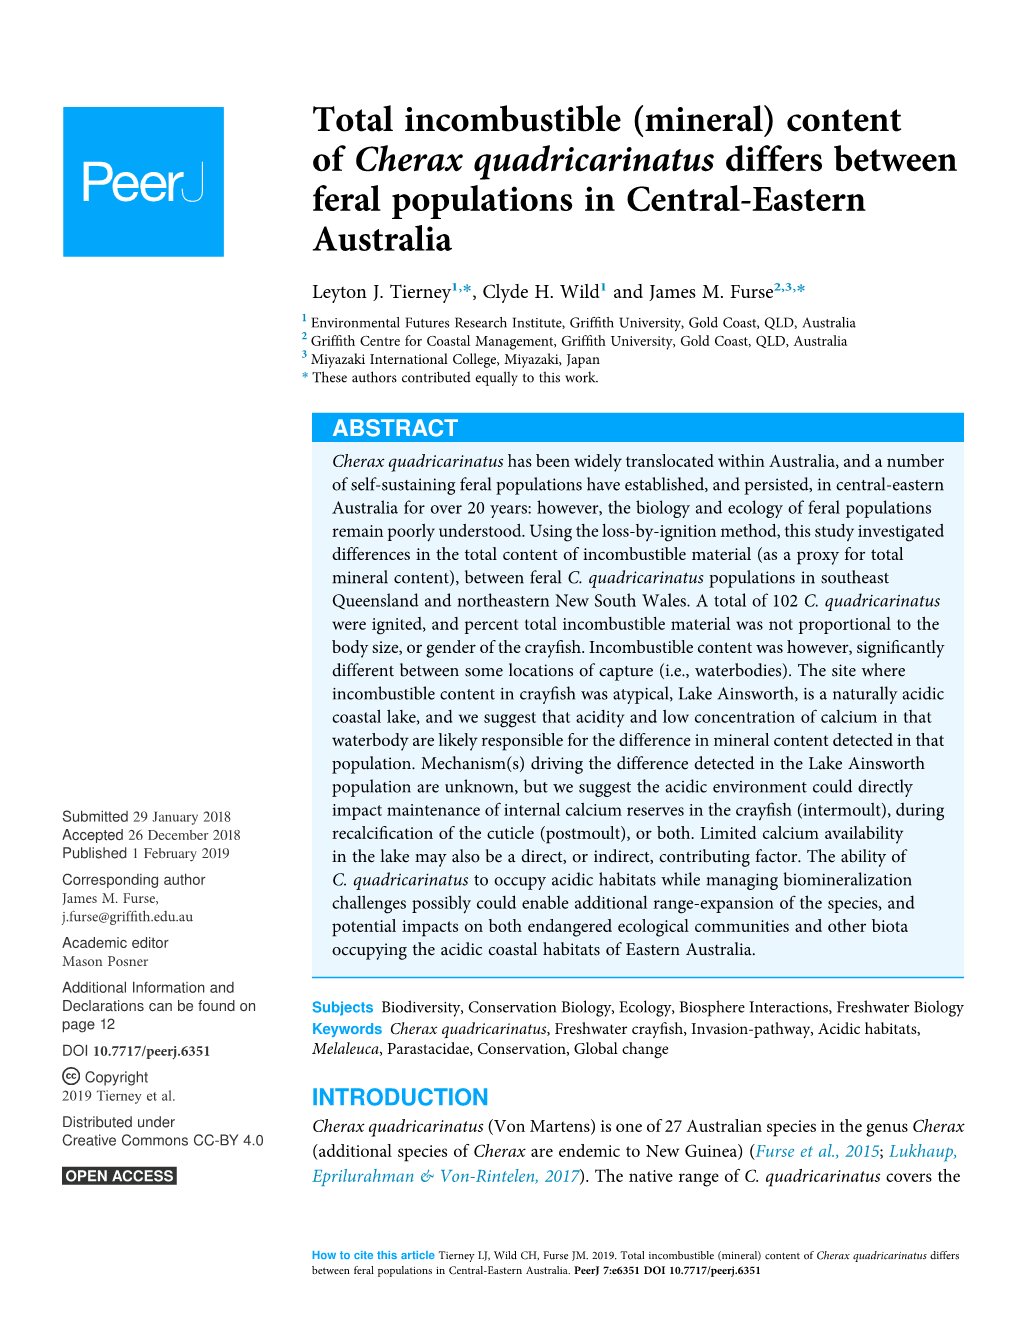 Content of Cherax Quadricarinatus Differs Between Feral Populations in Central-Eastern Australia